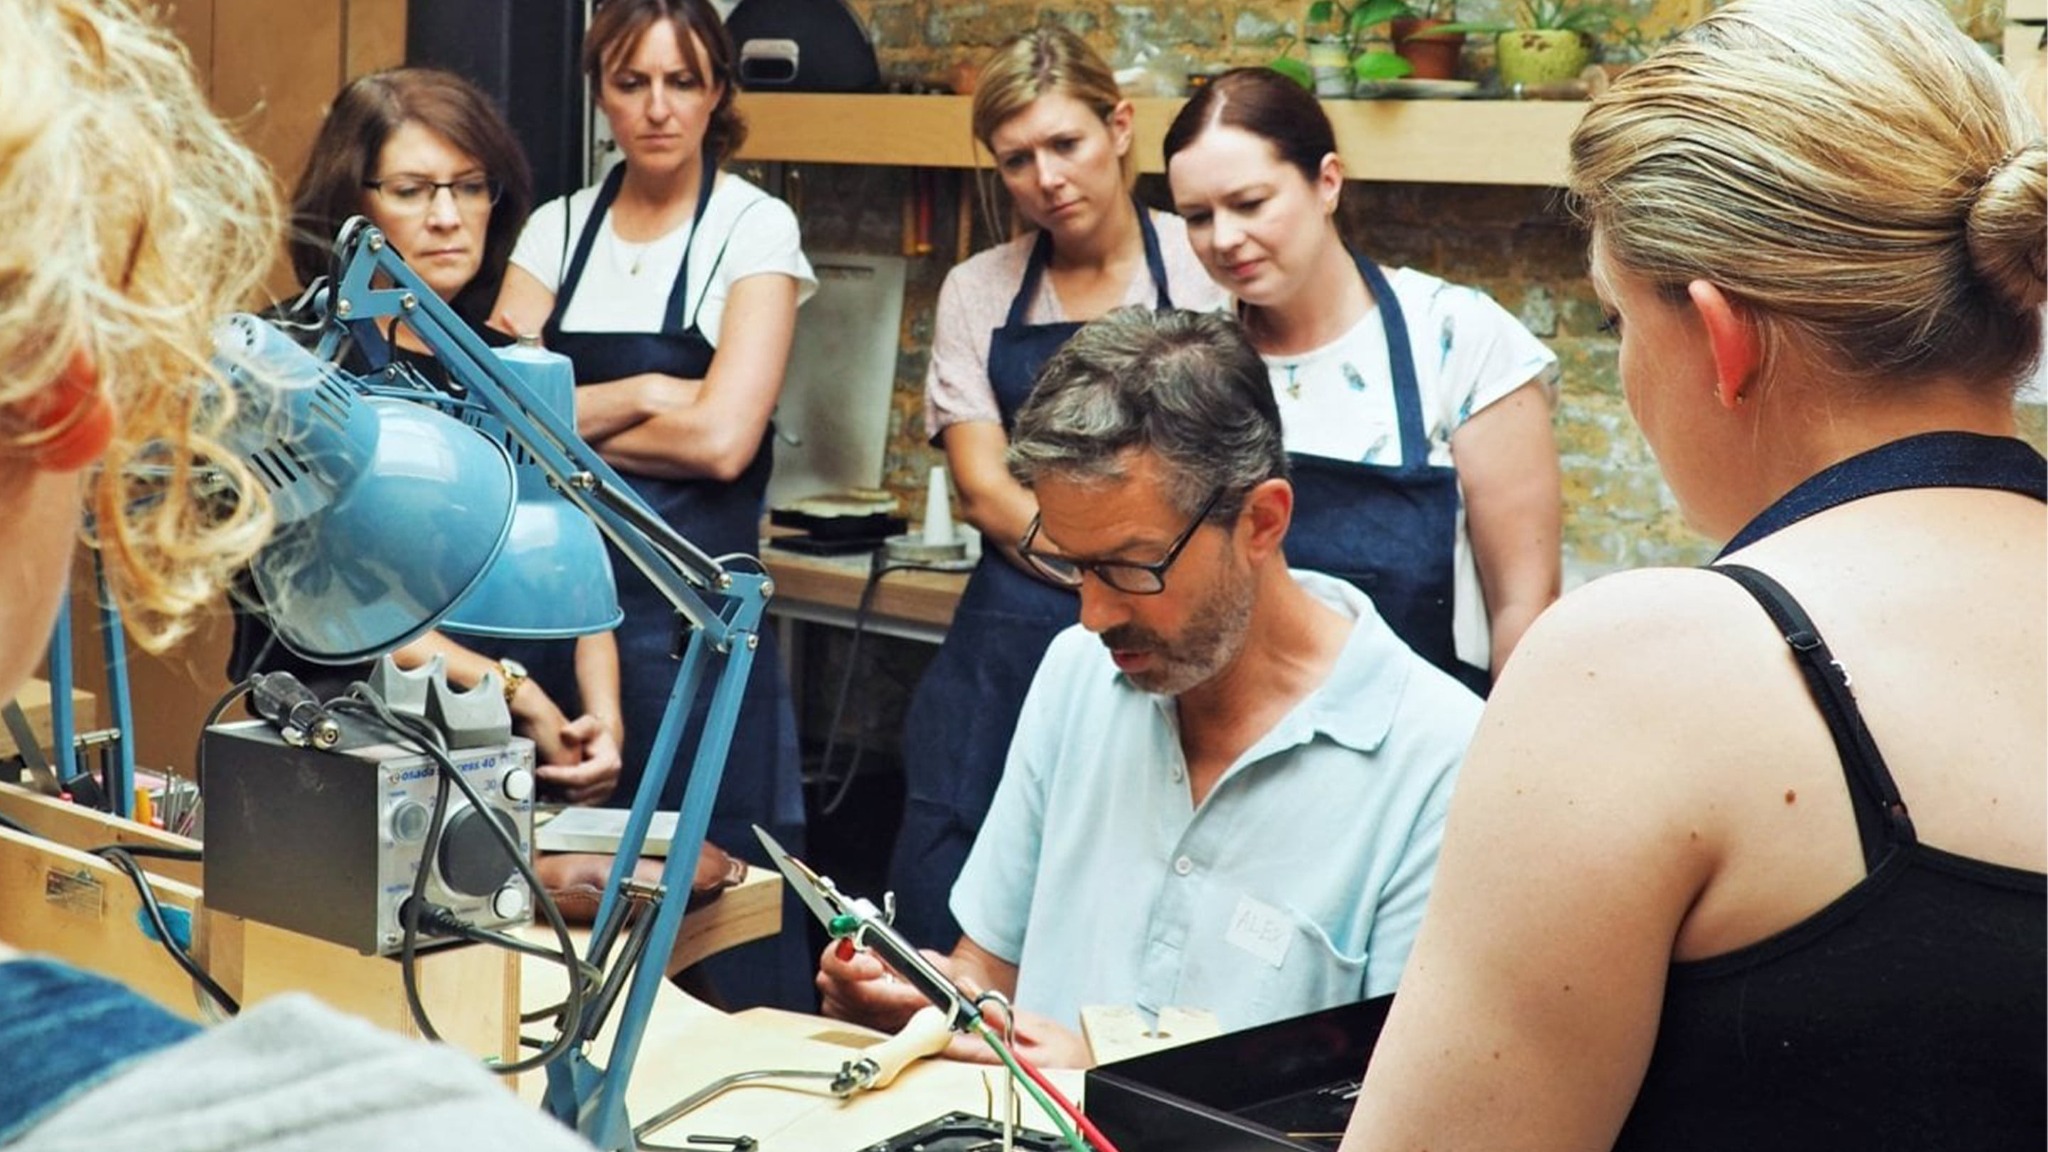 Alex Monroe teaching a class at Jewellery School in his Tower Bridge workshop